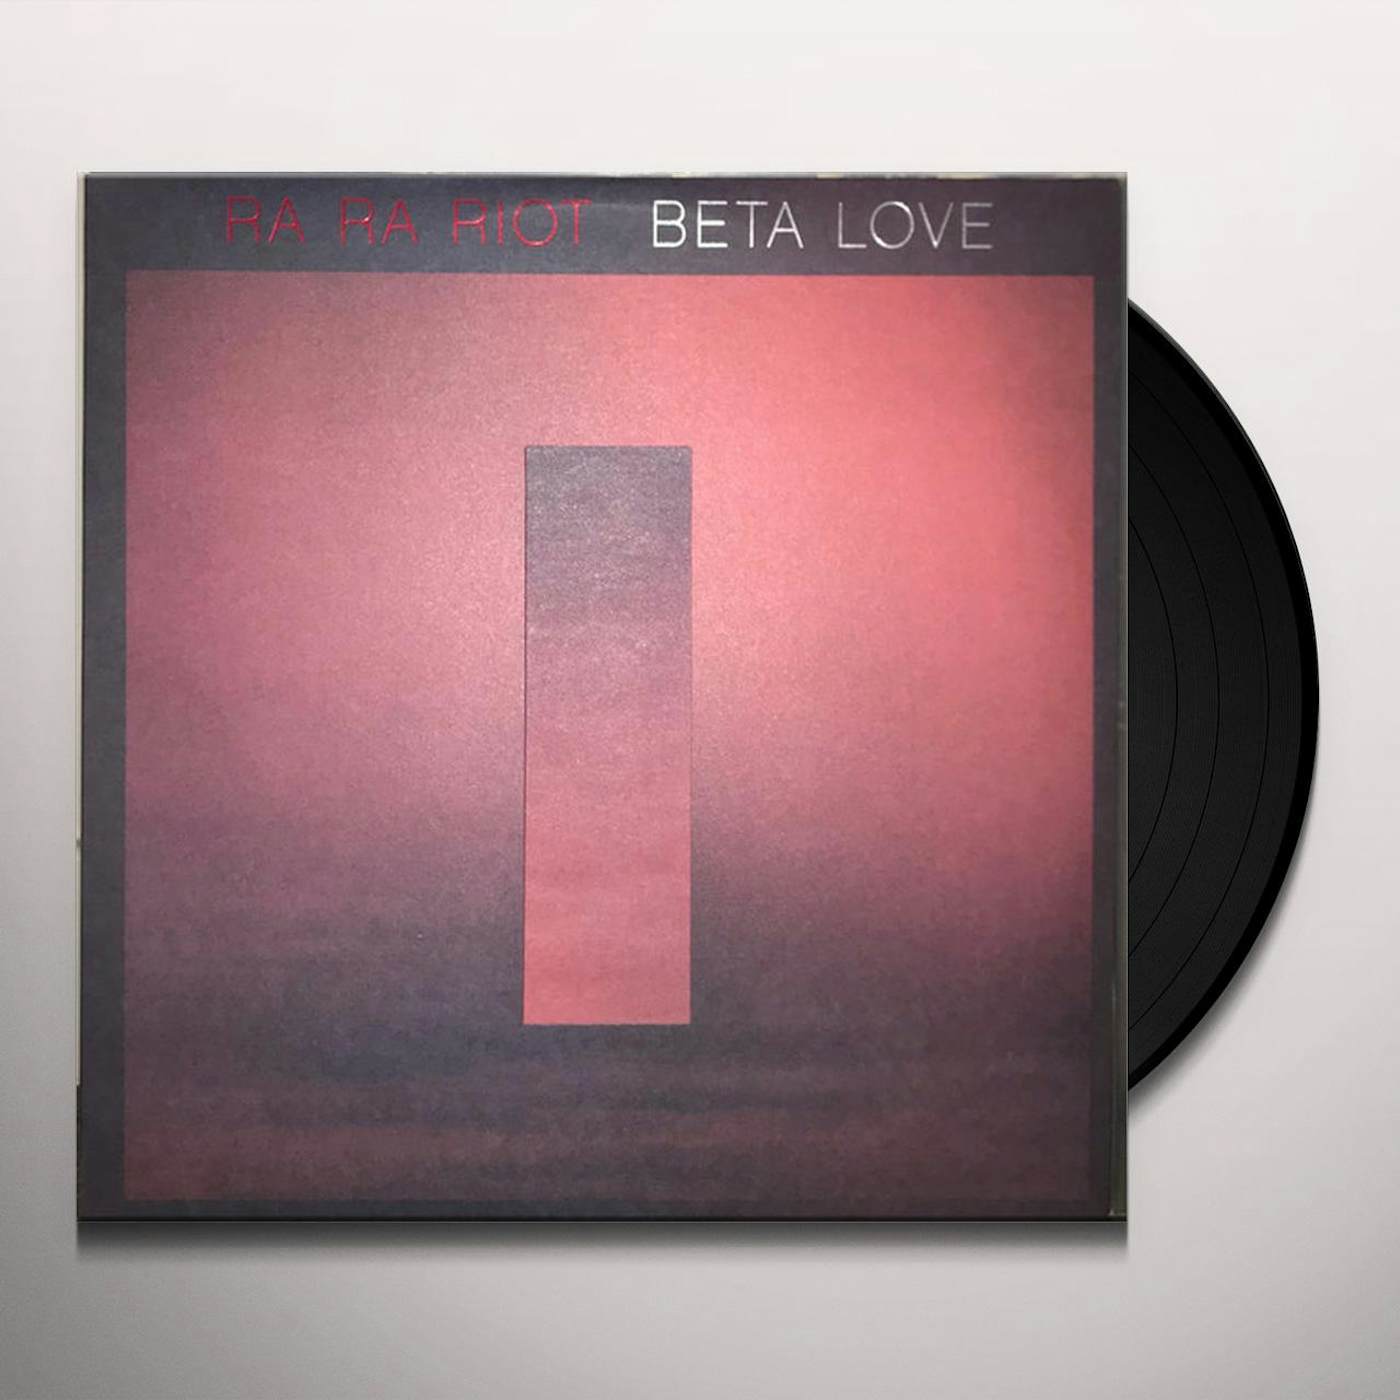 Ra Ra Riot Beta Love Vinyl Record